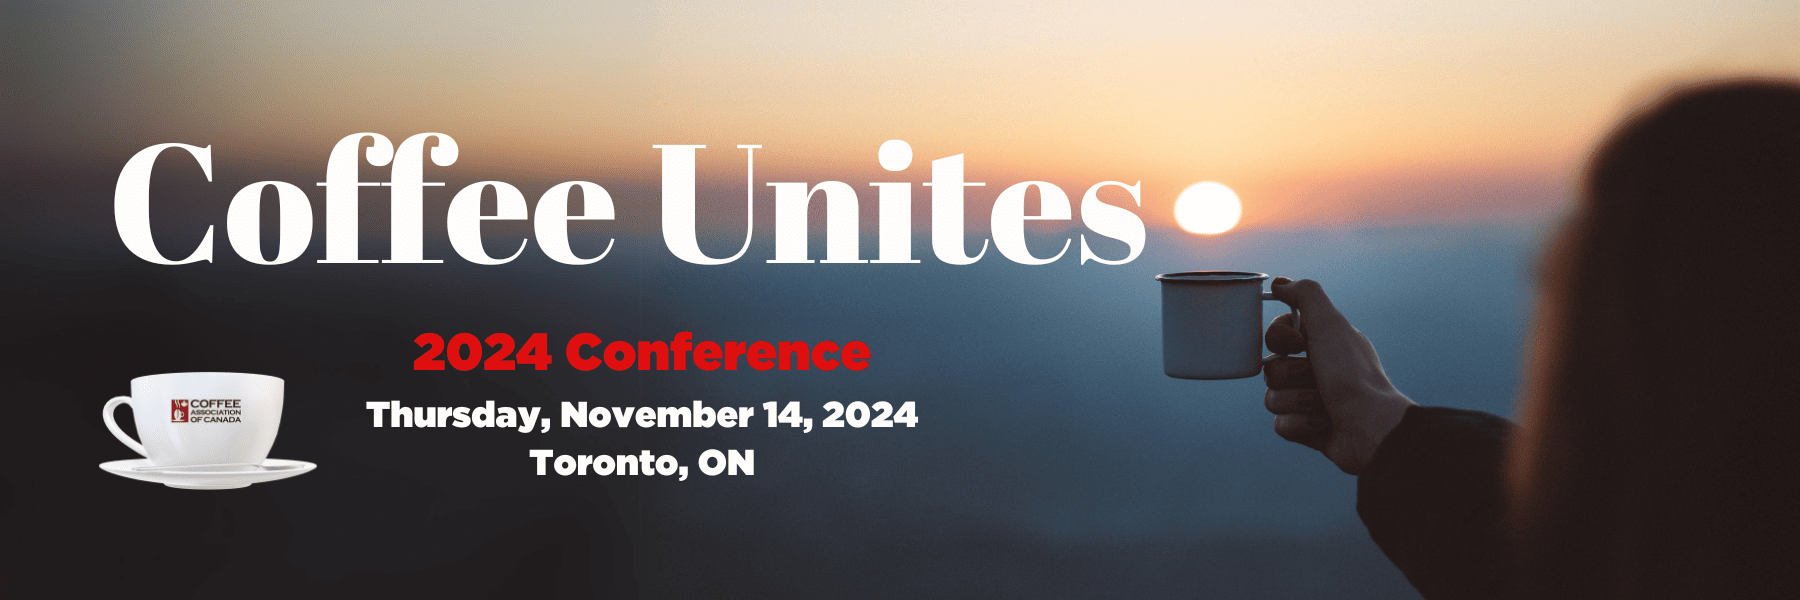 Coffee Unites—Coffee Association of Canada Conference, Thursday, November 14, 2024, Toronto ON